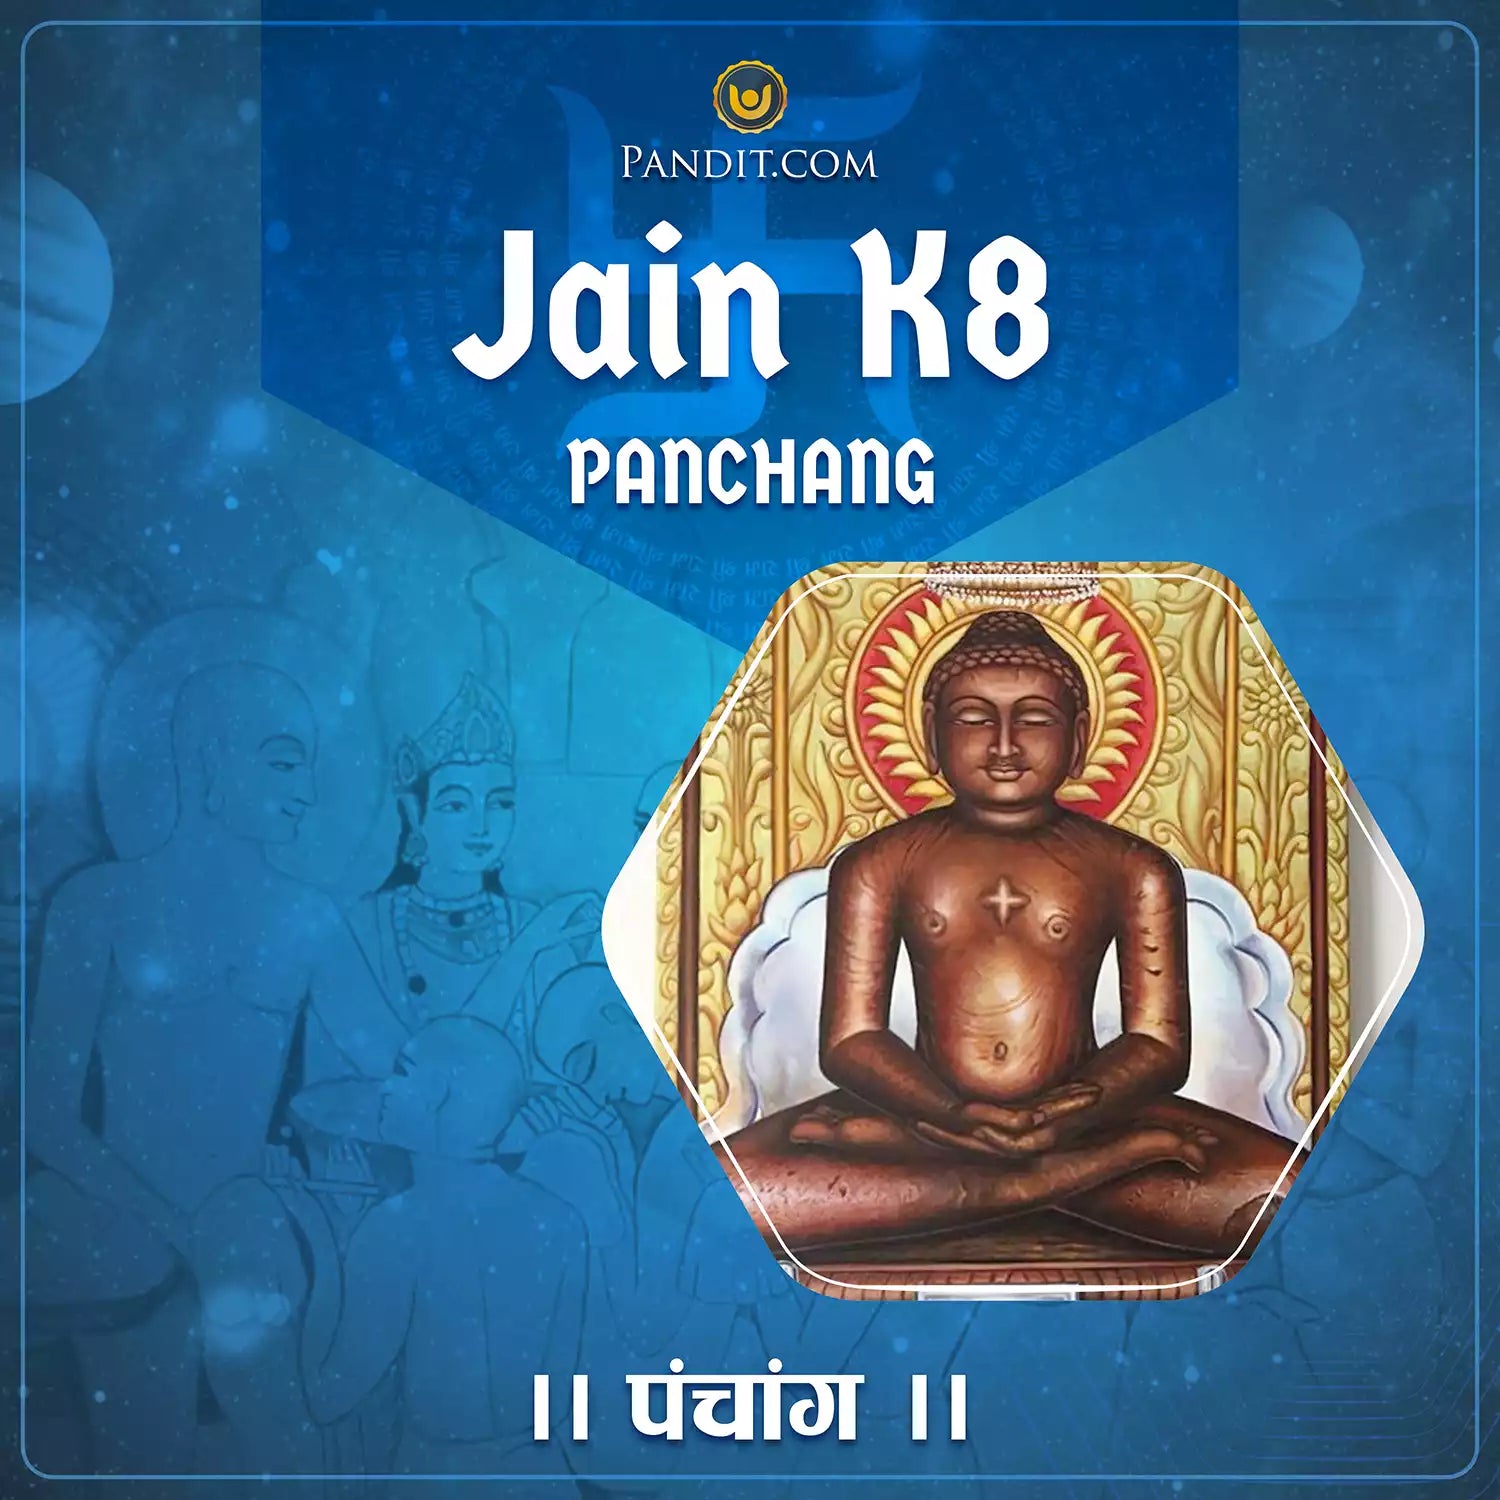 Jain K8